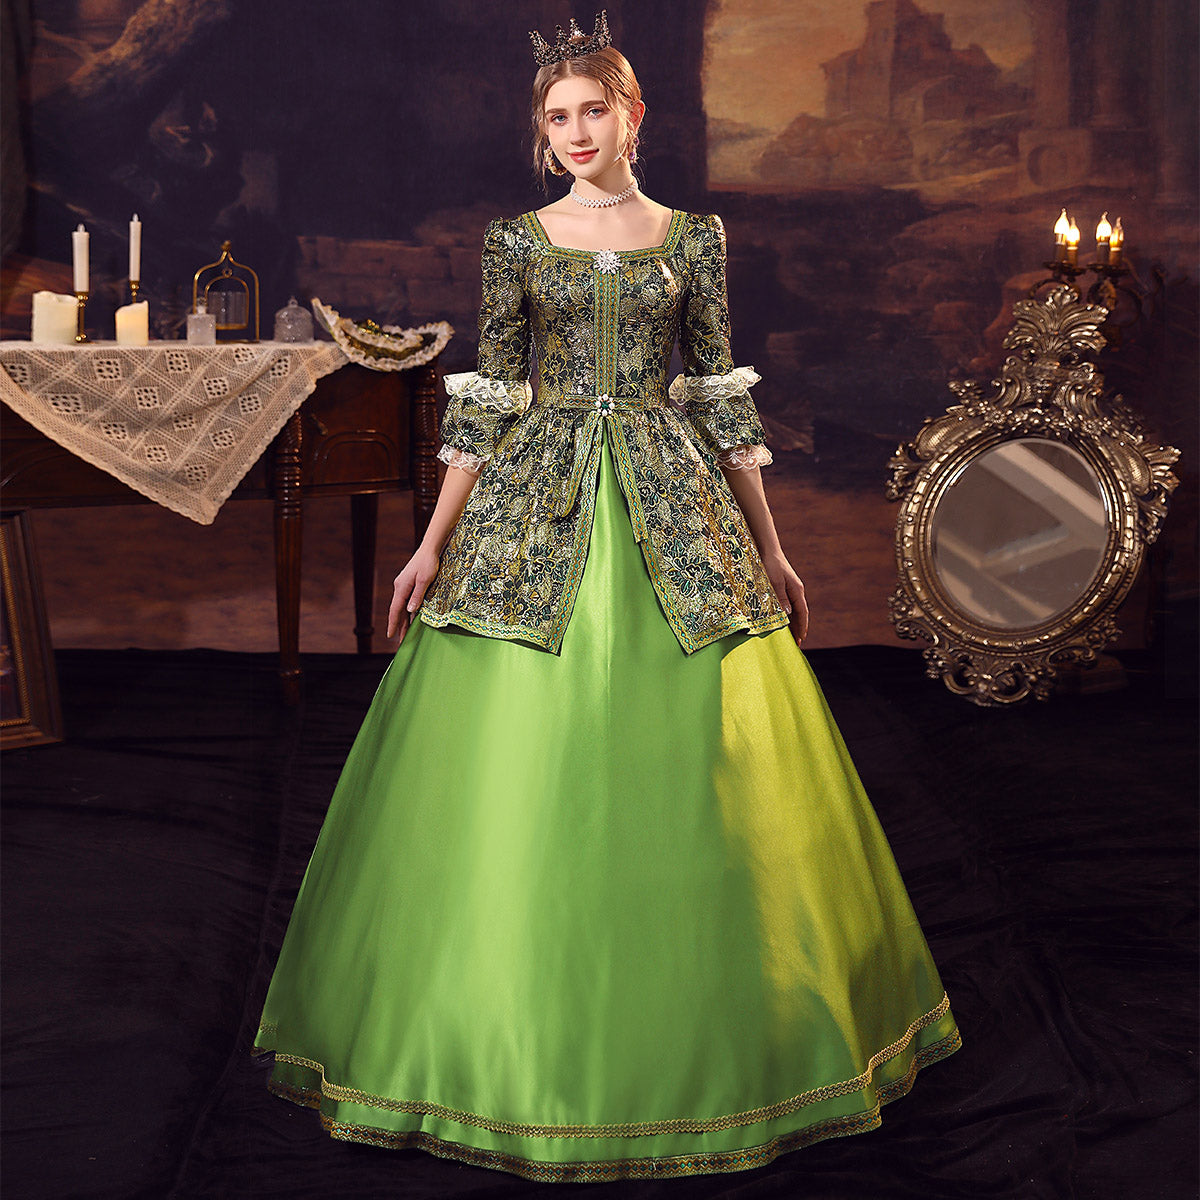 Green Retro Women's Marie Antoinette Costume Masquerade Ball Gown